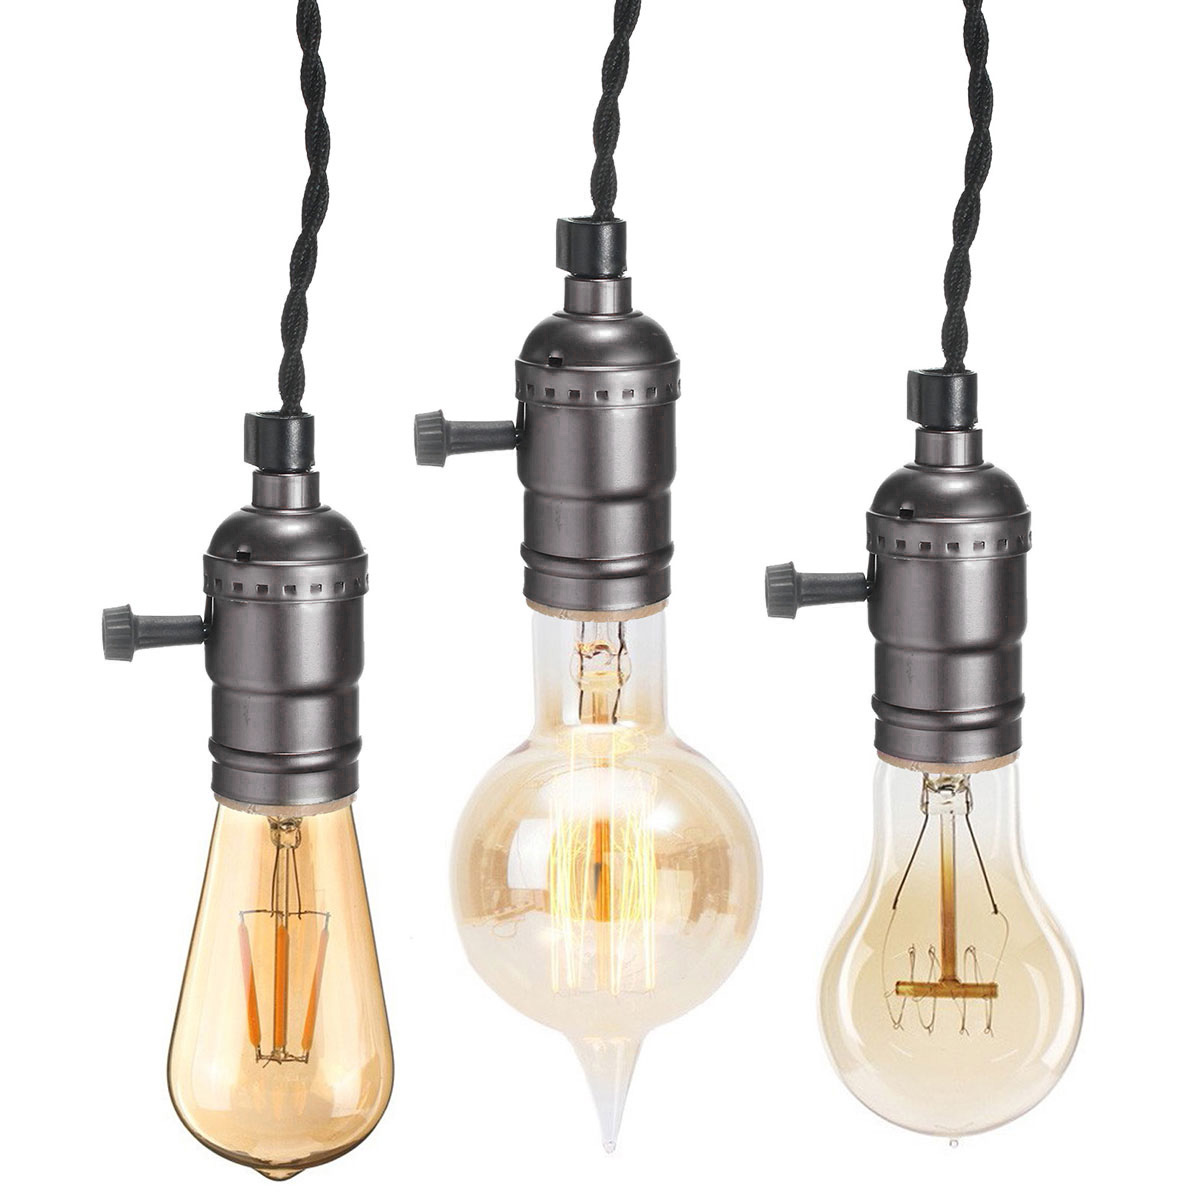 Kingso-E27-E26-Edison-Socket-Vintage-Style-Pendant-Light-Cord-Dimmer-With-Lamp-Switch-AC-110-220V-1040132-2